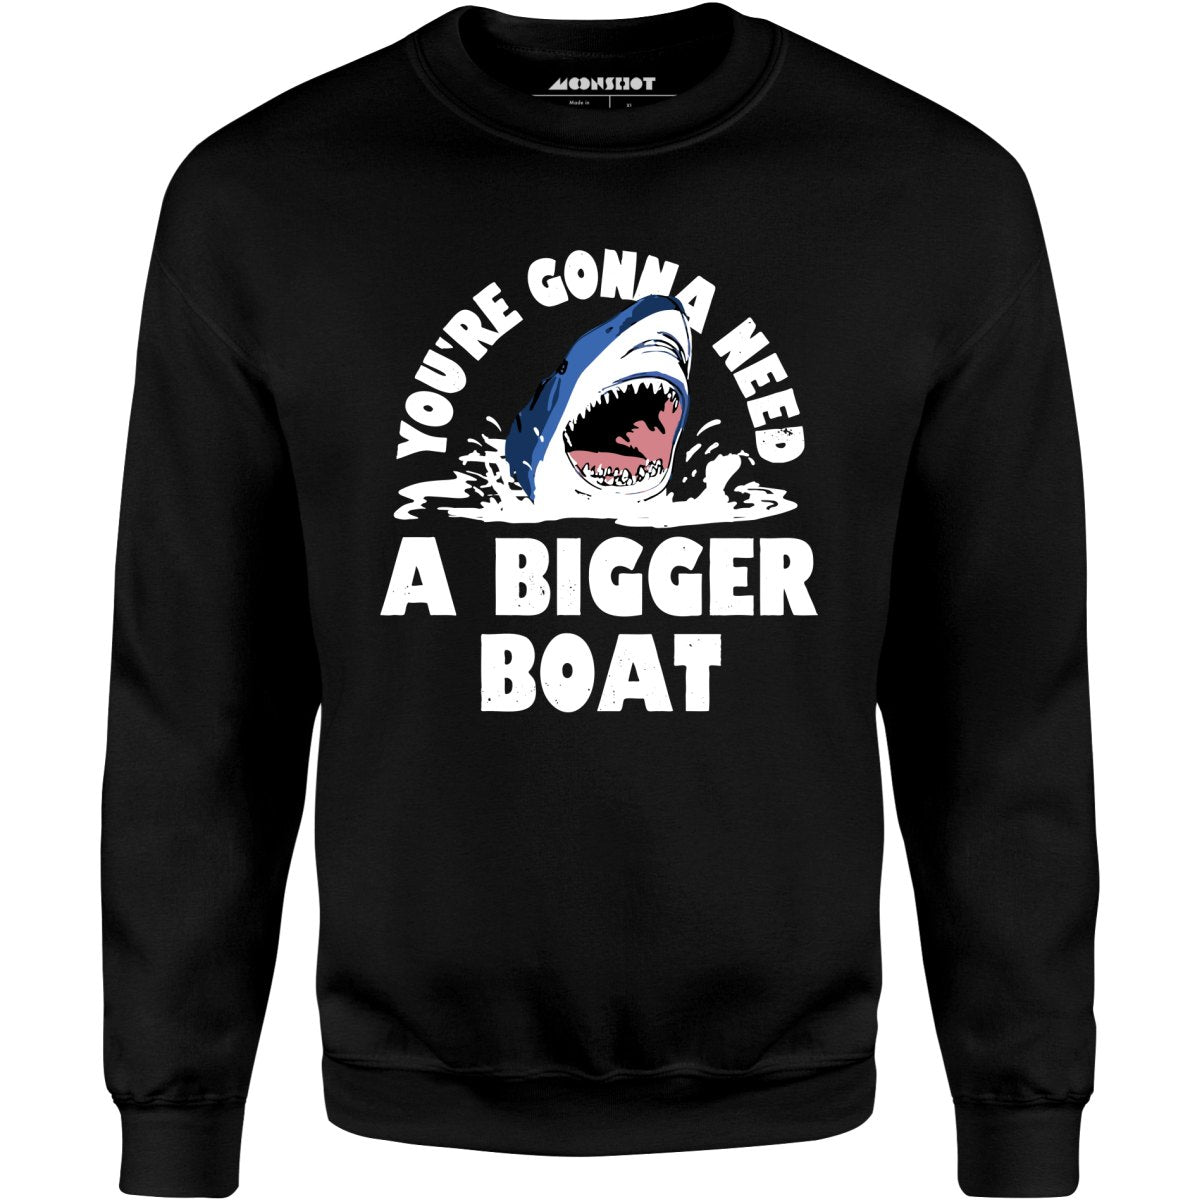 You're Gonna Need A Bigger boat - Unisex Sweatshirt